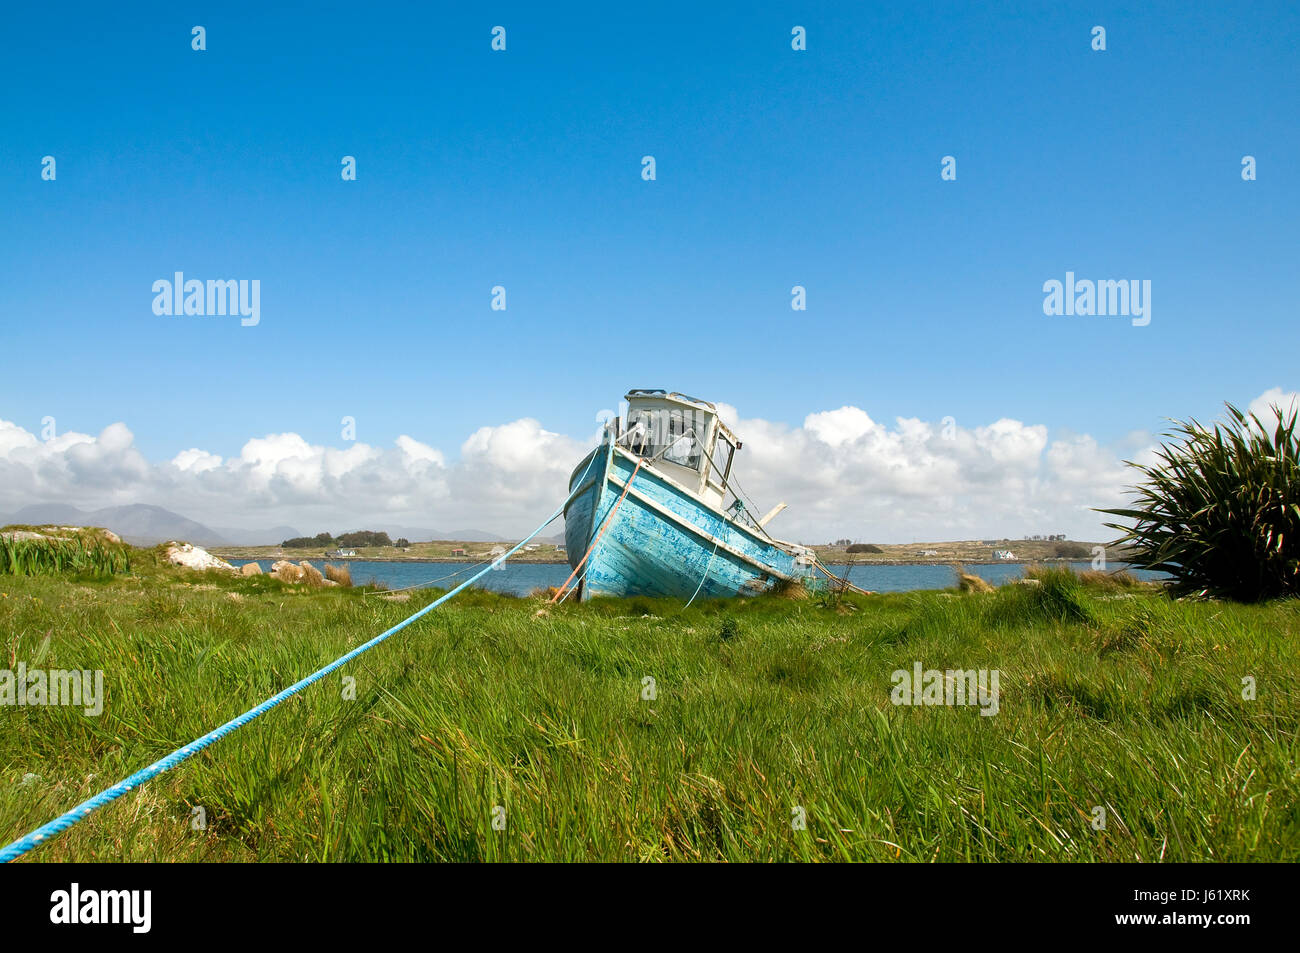 https://c8.alamy.com/comp/J61XRK/fishing-boat-on-dry-land-J61XRK.jpg